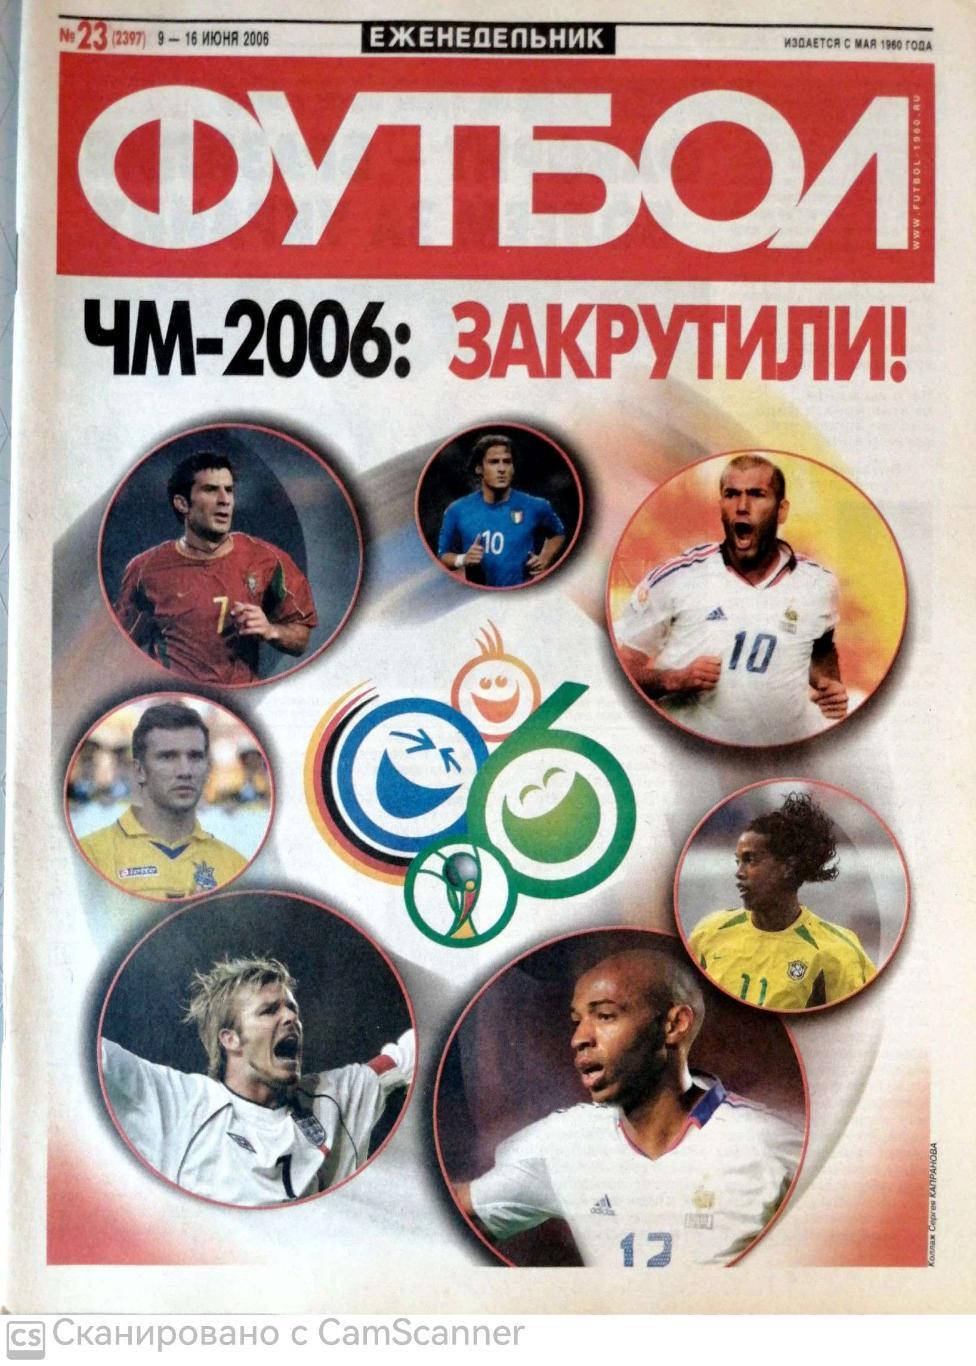 Еженедельник «Футбол» (Москва). 2006 год. №23